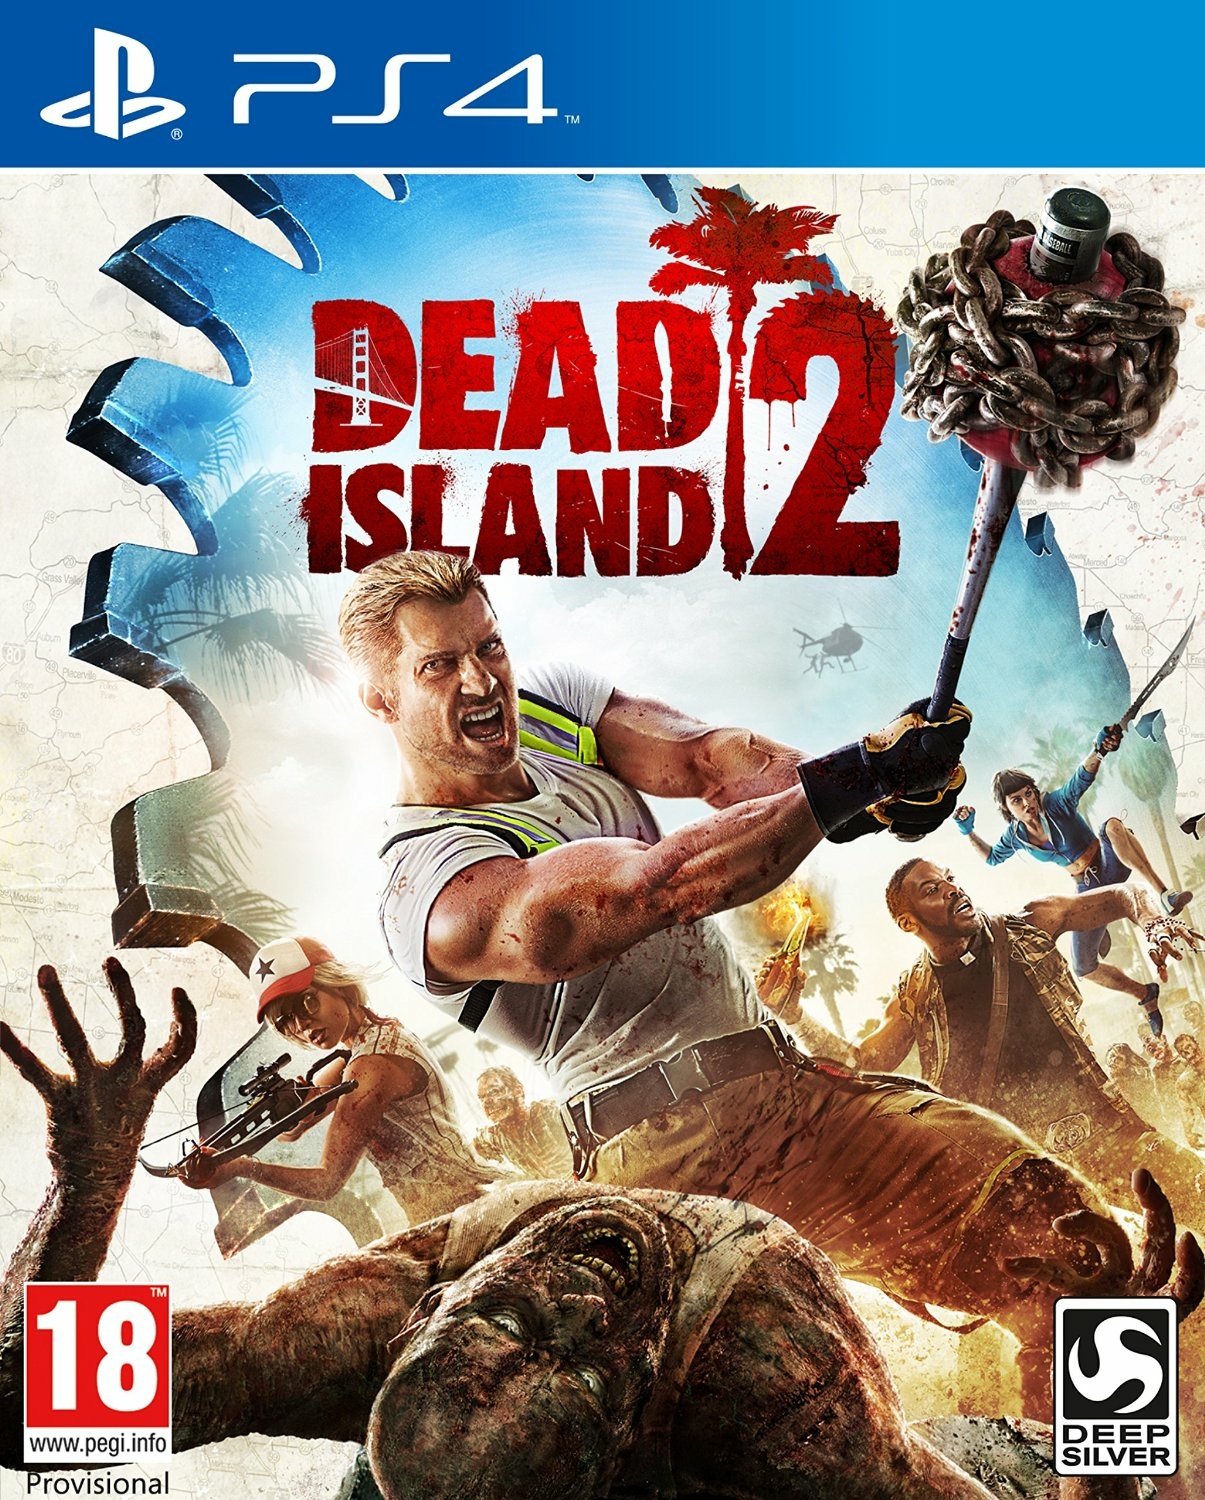 dead island 2 game length